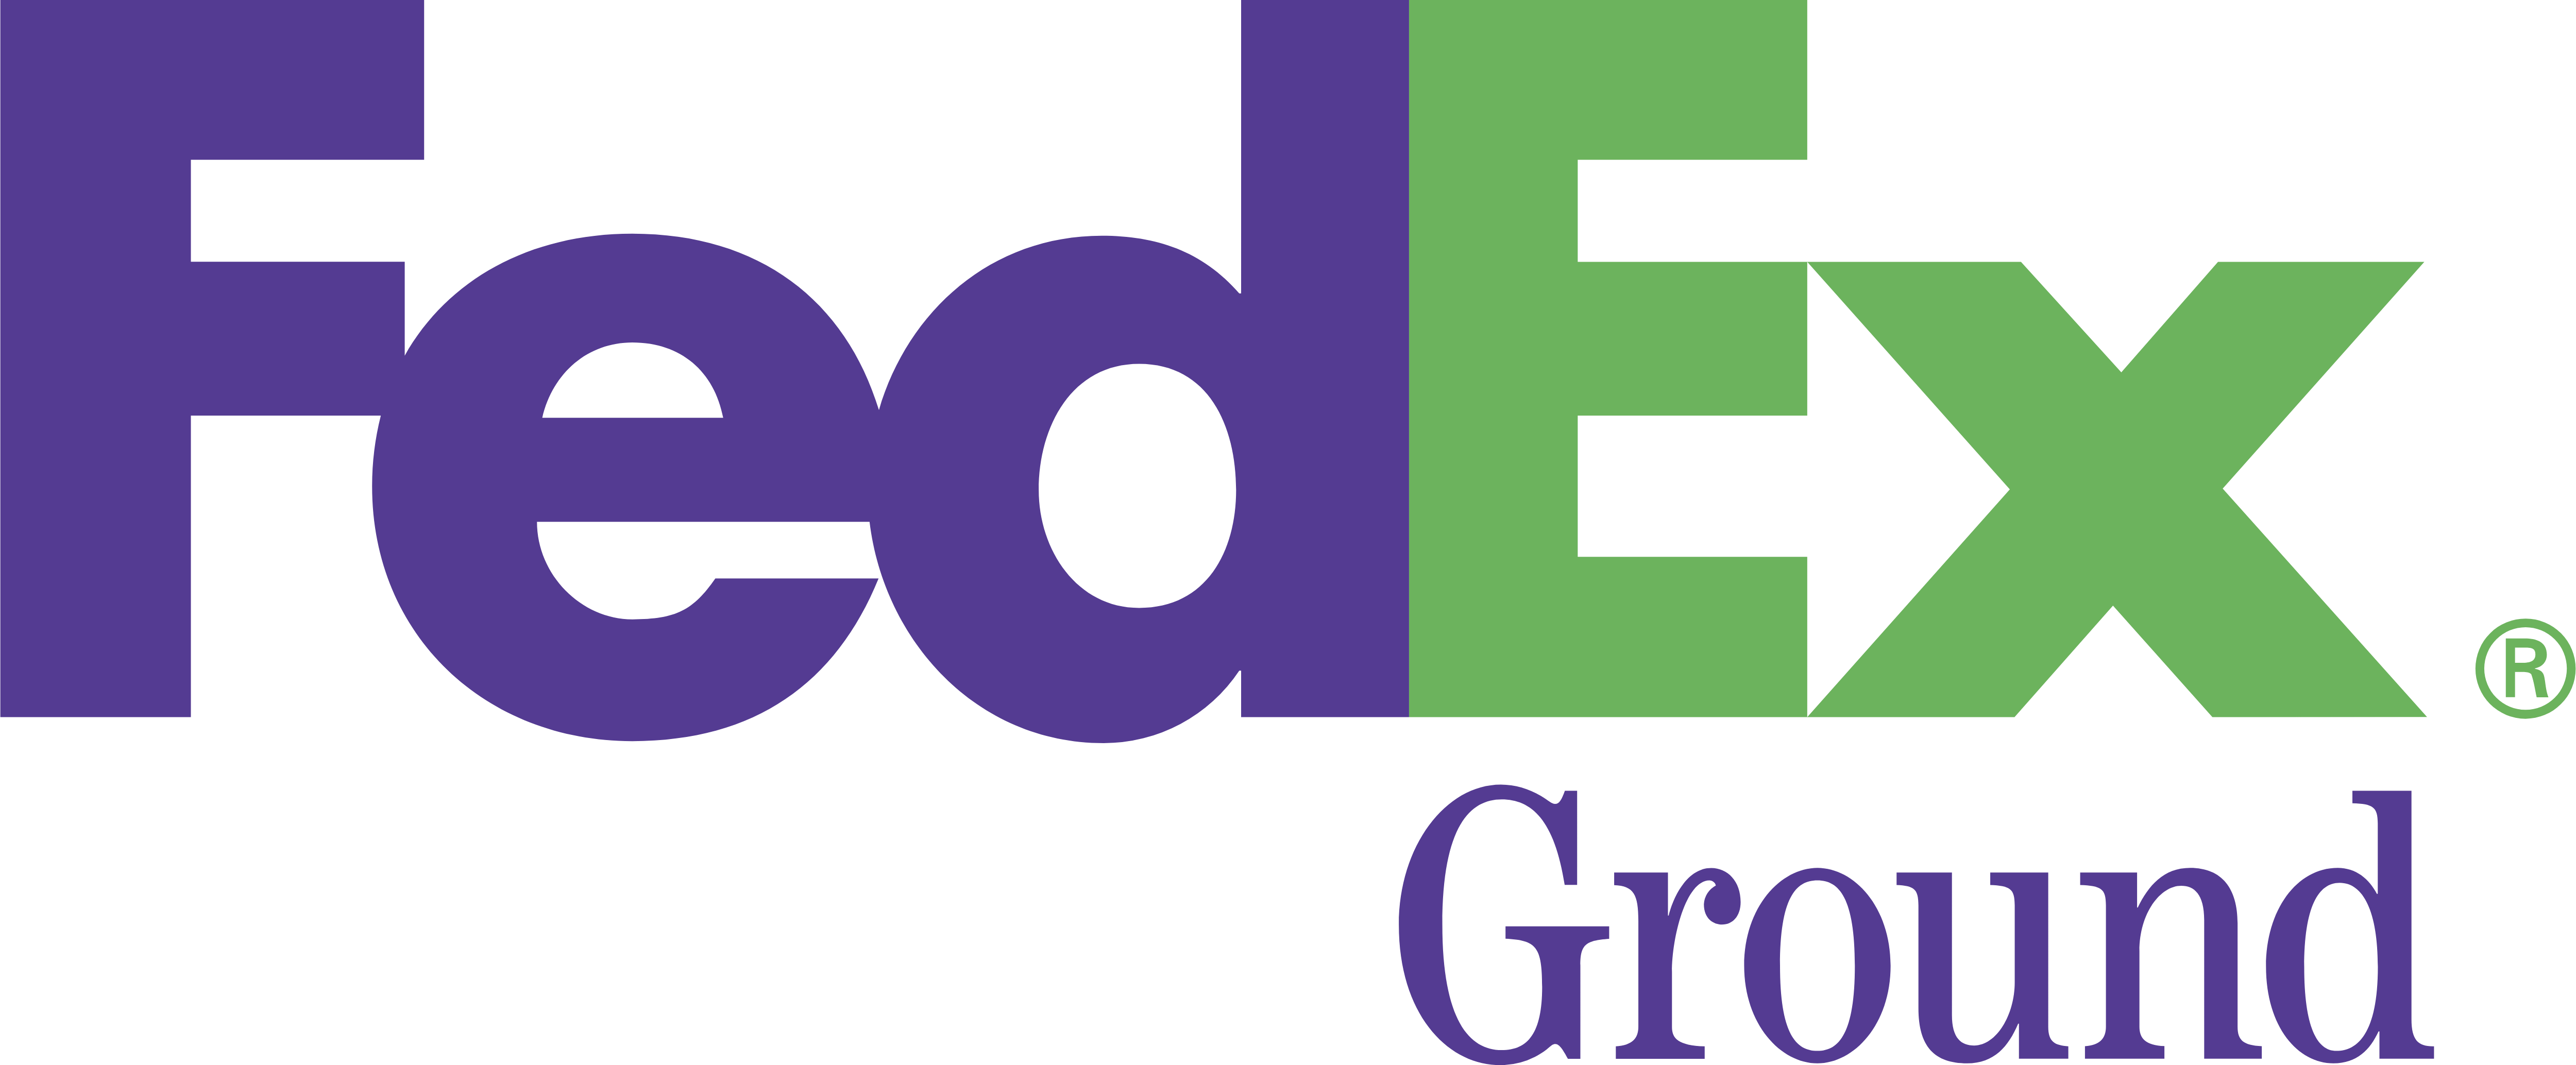 Purple and Green Logo - FedEx